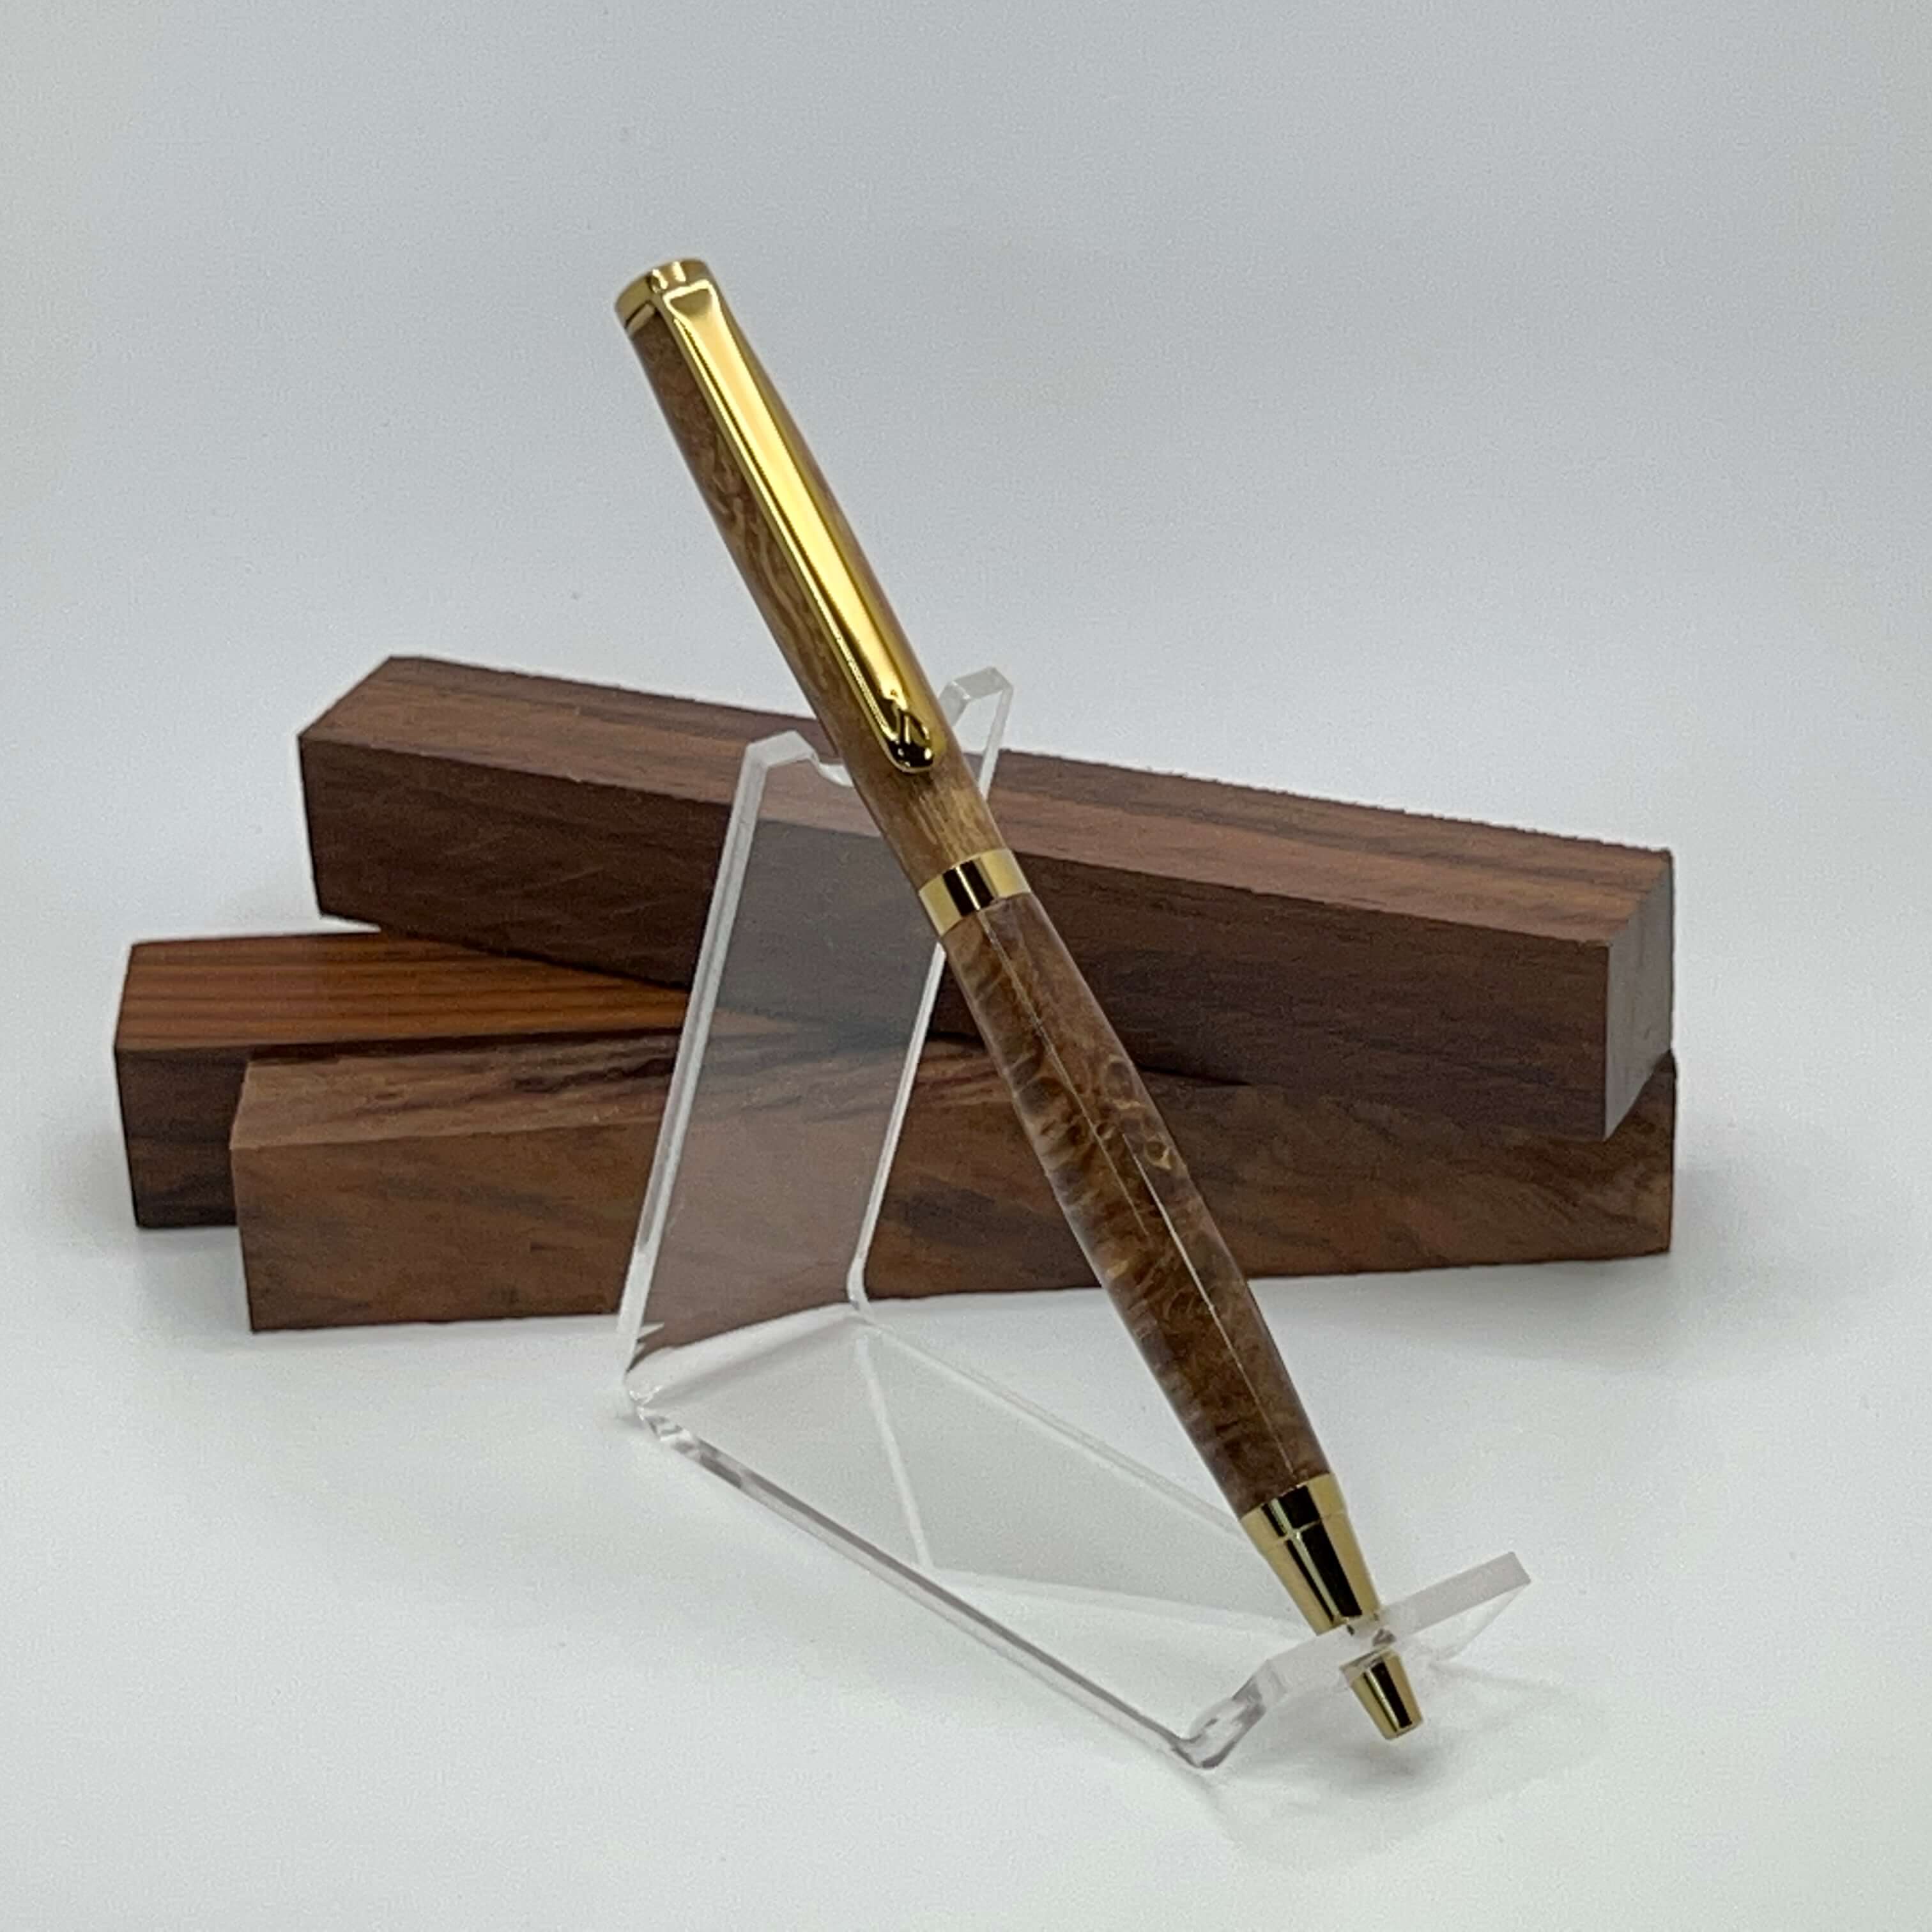 Handcrafted Koa Wood Pen - Ideal 5-Year Anniversary & Graduation